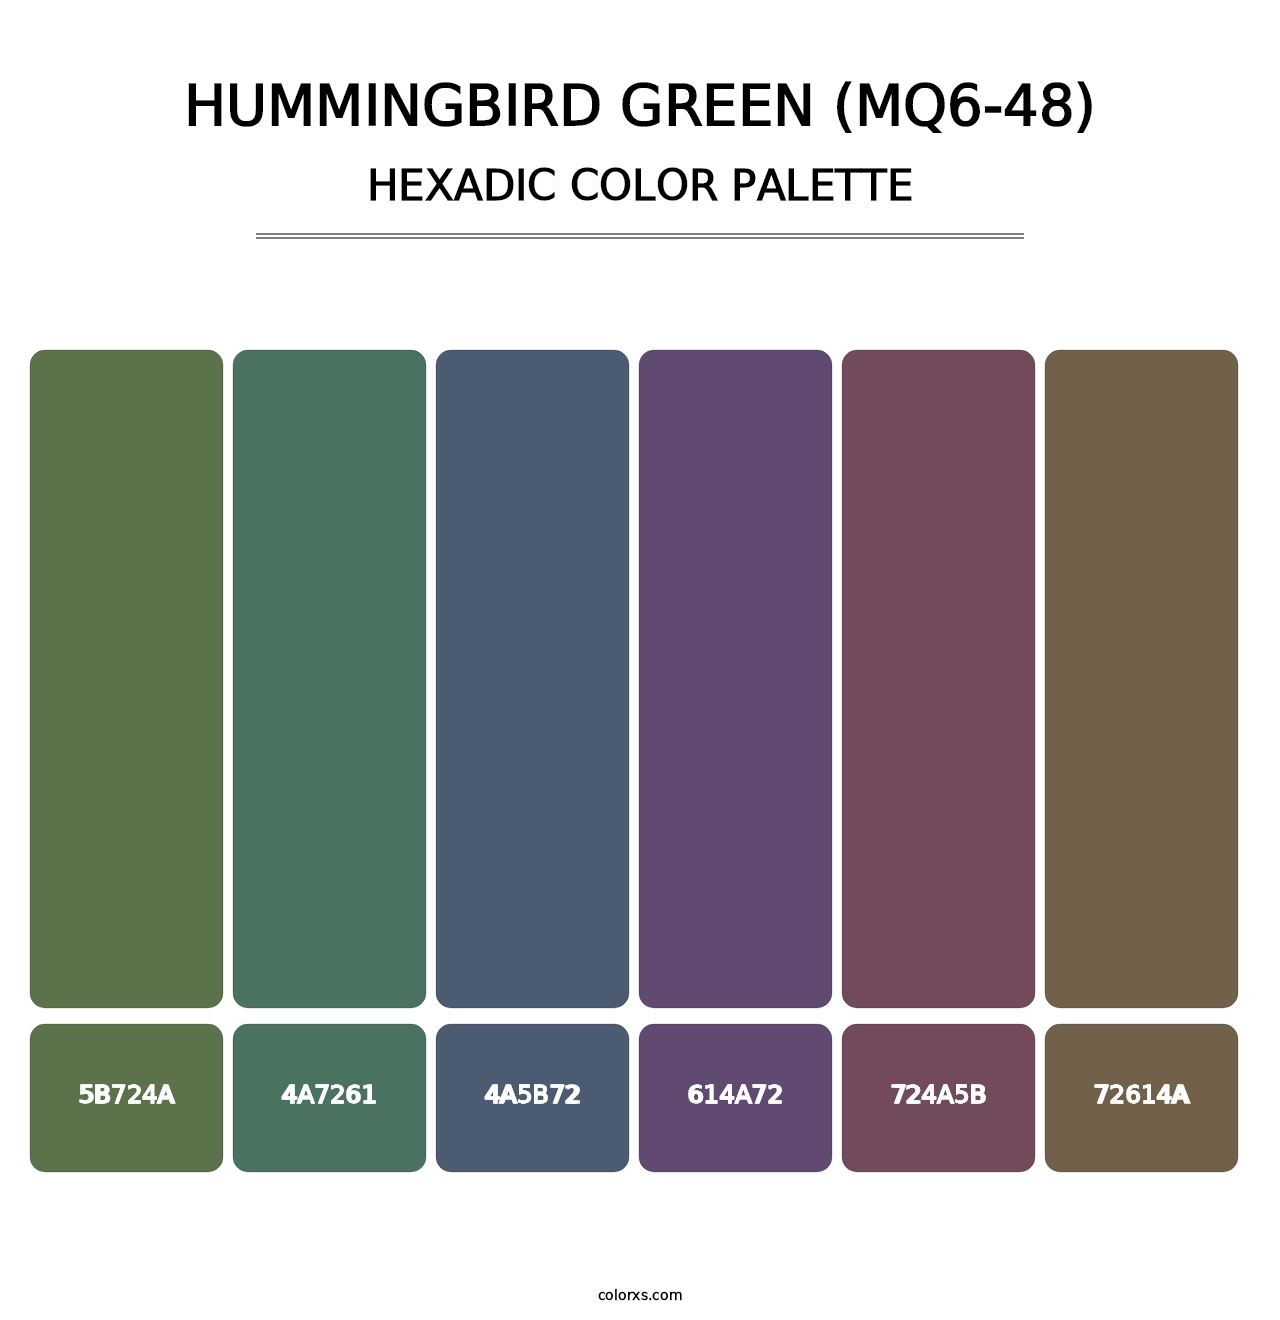 Hummingbird Green (MQ6-48) - Hexadic Color Palette